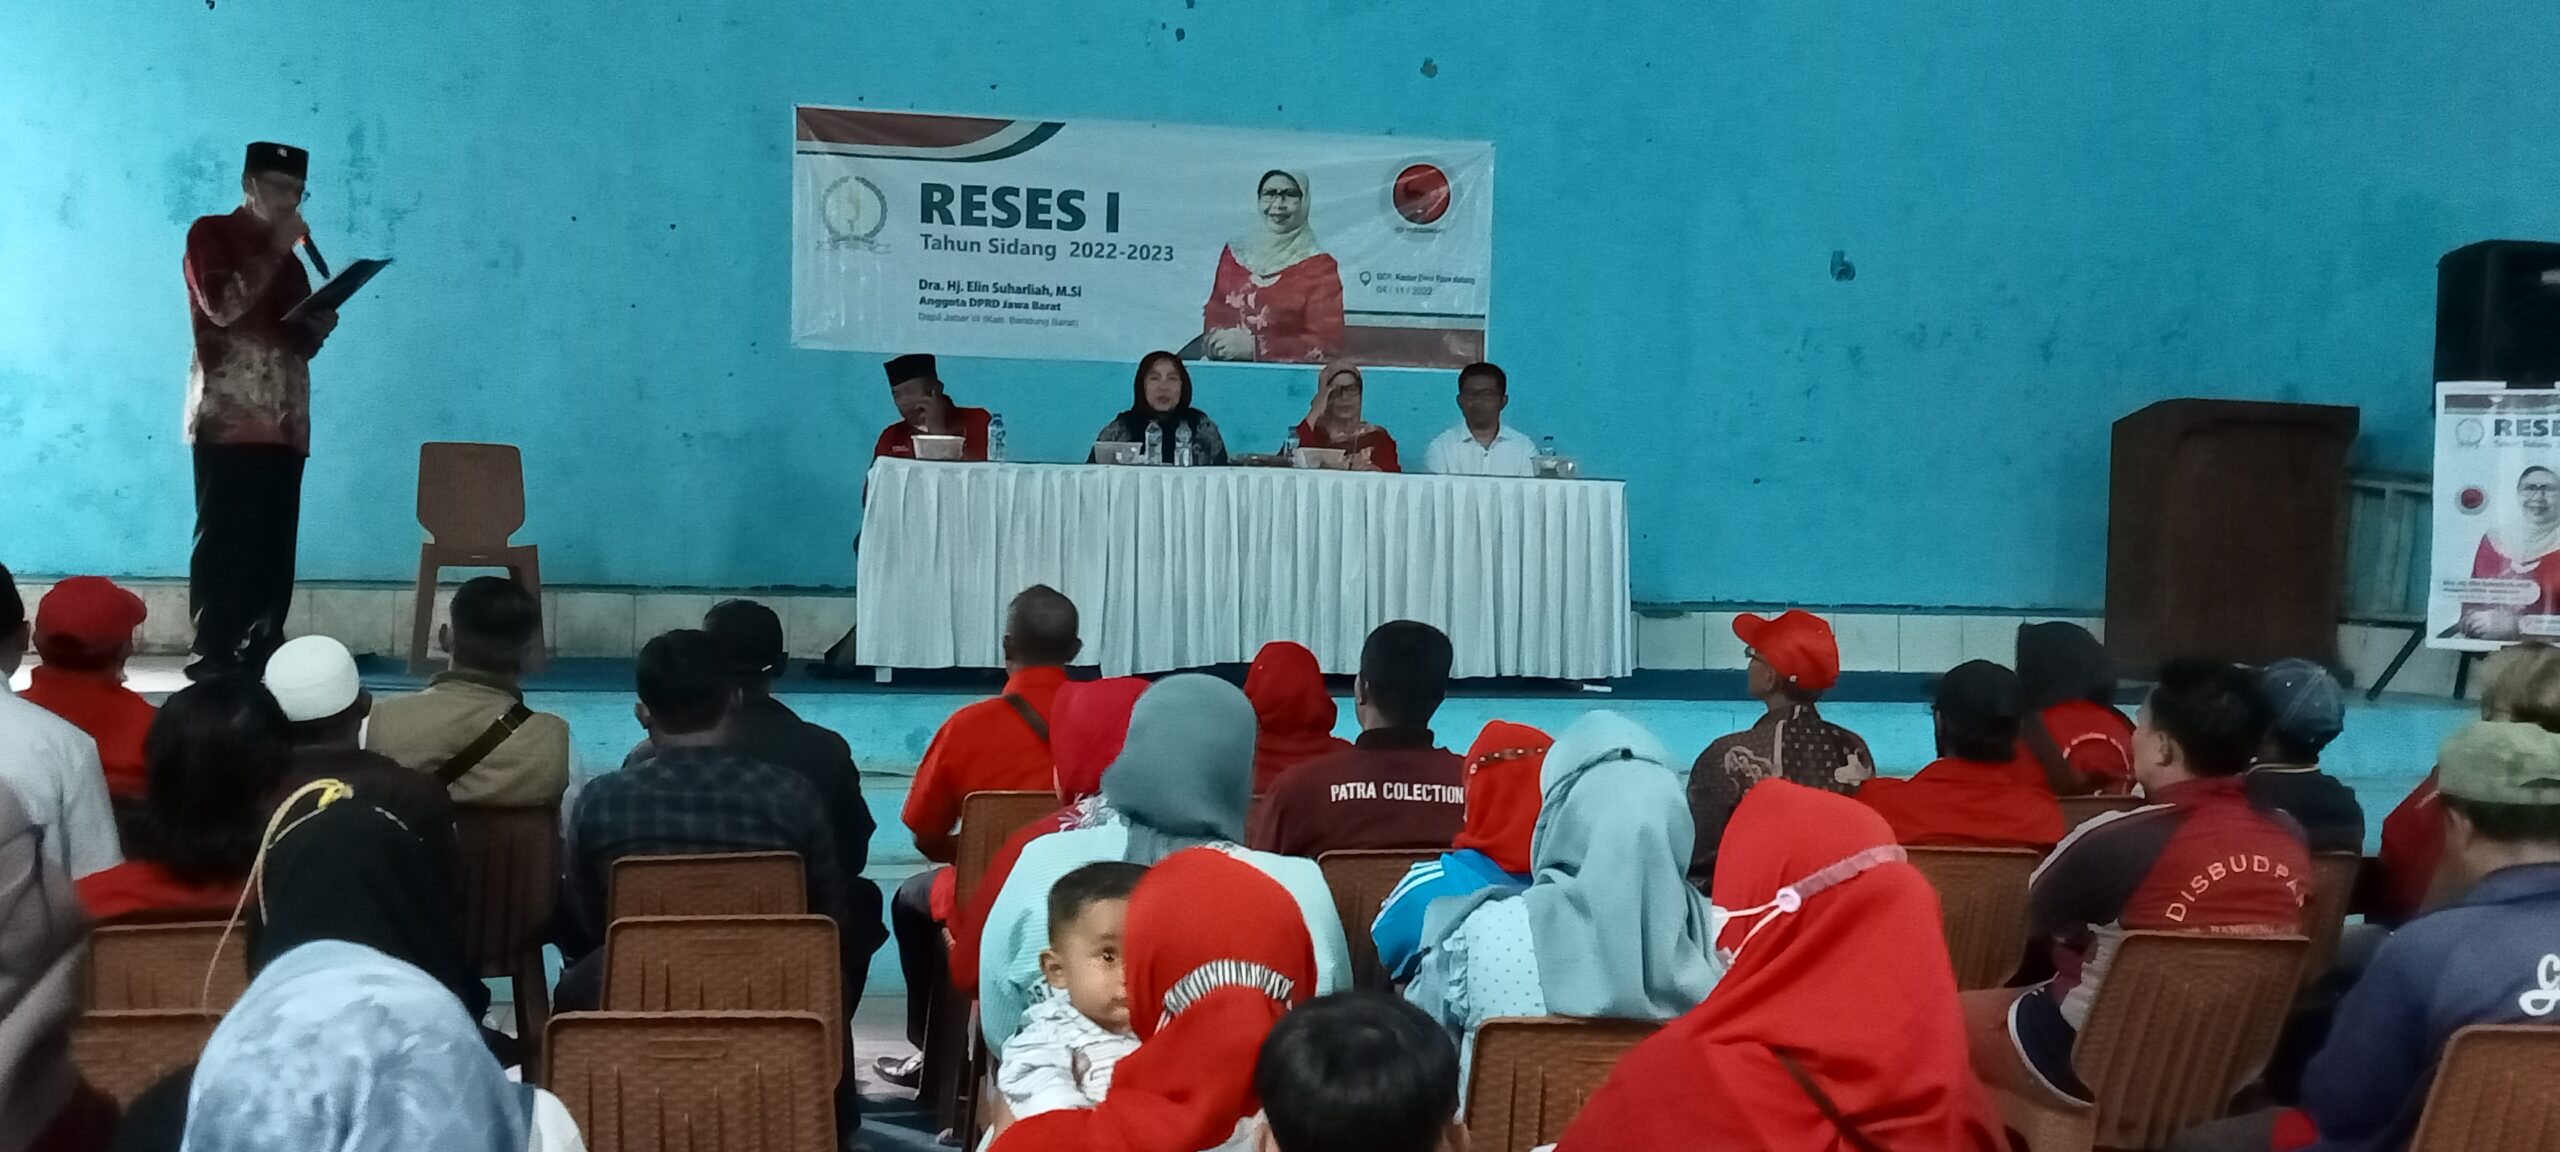 RESES 1 Tahun Sidang 2022-2023 Dra.Hj Ellin Suhersliah M,SI Anggota DPRD Jawa Barat Dapil Komisi 111 (Kab.Bandung barat)